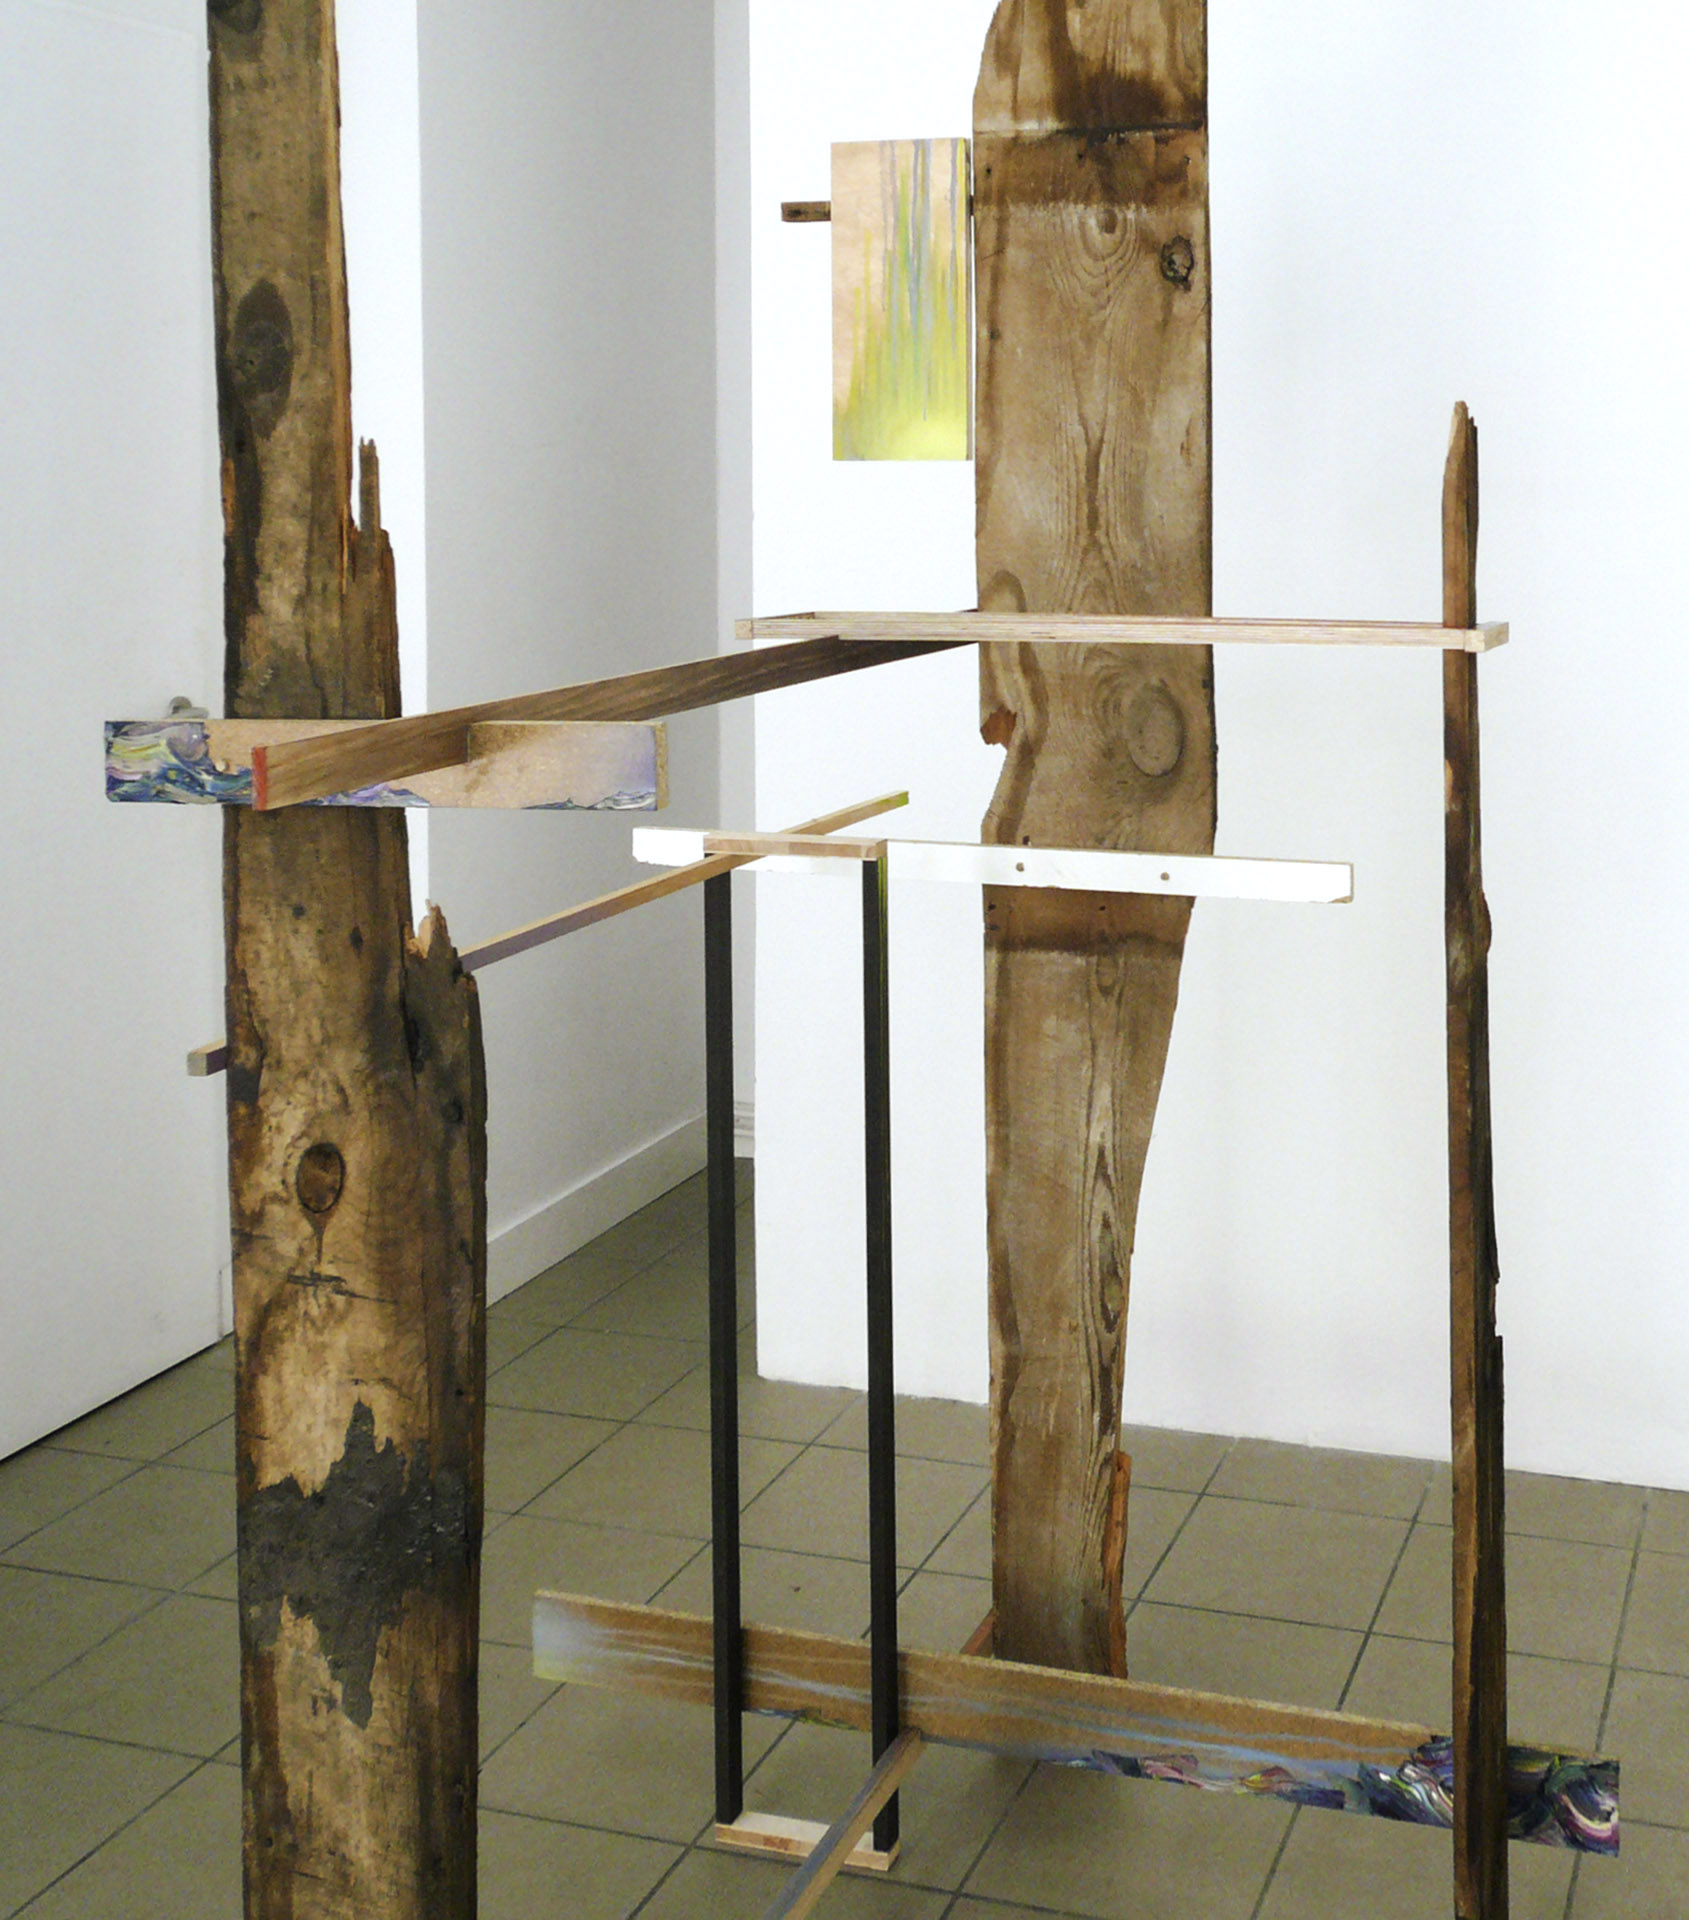   Mübafix 480 (Detail)  Matthias Moravek &amp;  Gabriele Künne &nbsp; 220 x 80 x 60 cm mixed media,&nbsp;2013 